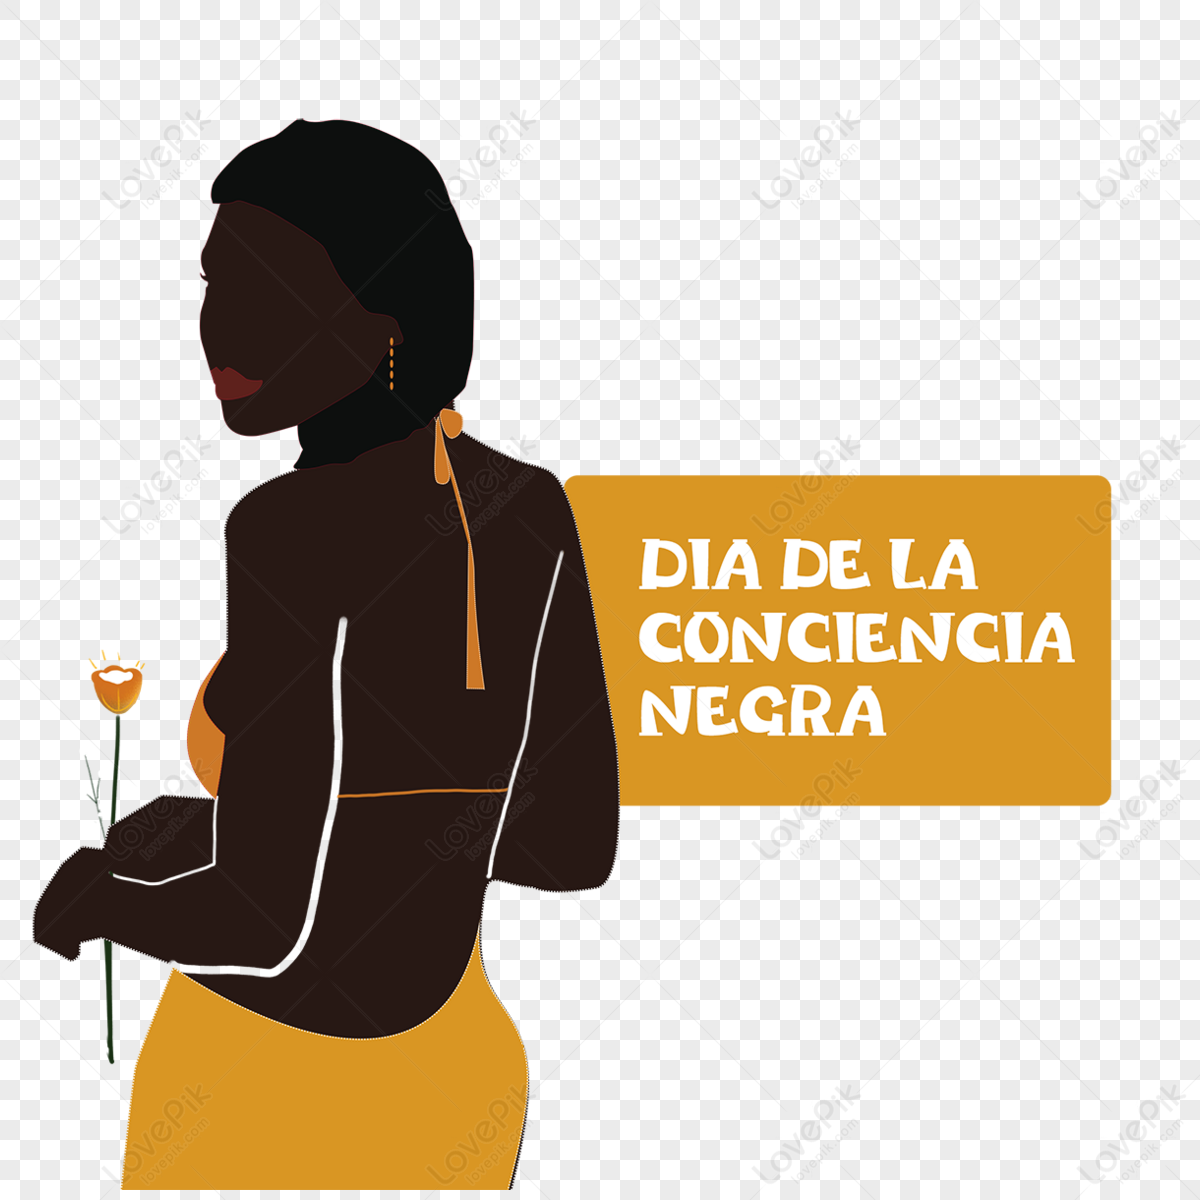 Aware Clipart PNG Images, Cartoon Black Woman Awareness Illustration Black  Awareness Day Día De La Conciencia Negra, Plant, Hair, Woman PNG Image For  Free Download